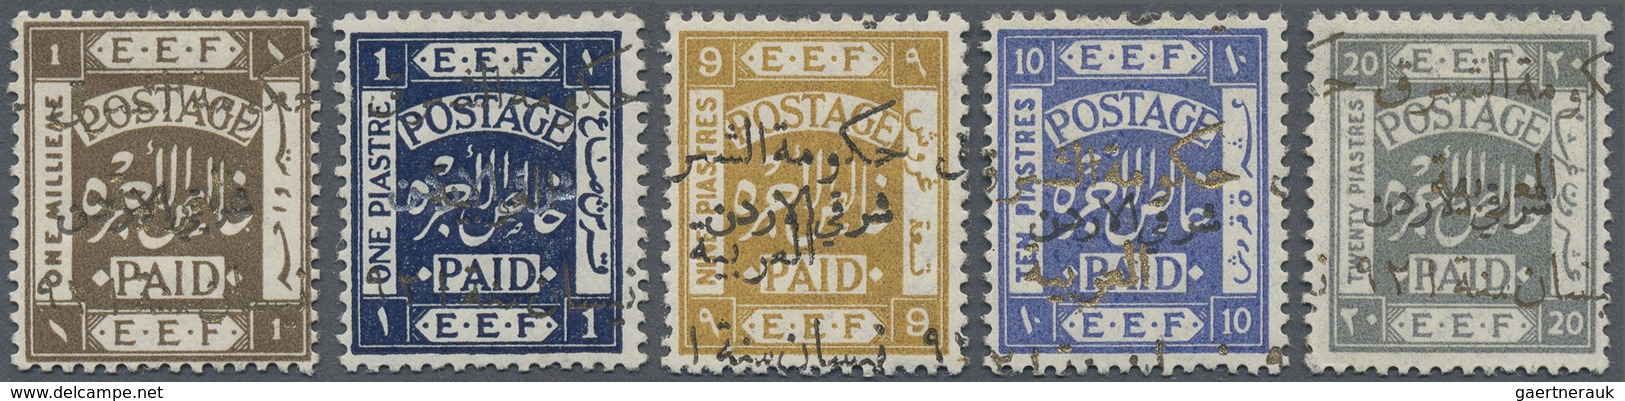 * Jordanien: 1923, Hukumet El Shark Overprinted Five Values Up To 20 P. Grey, All Perf.14 Showing Over - Jordanië